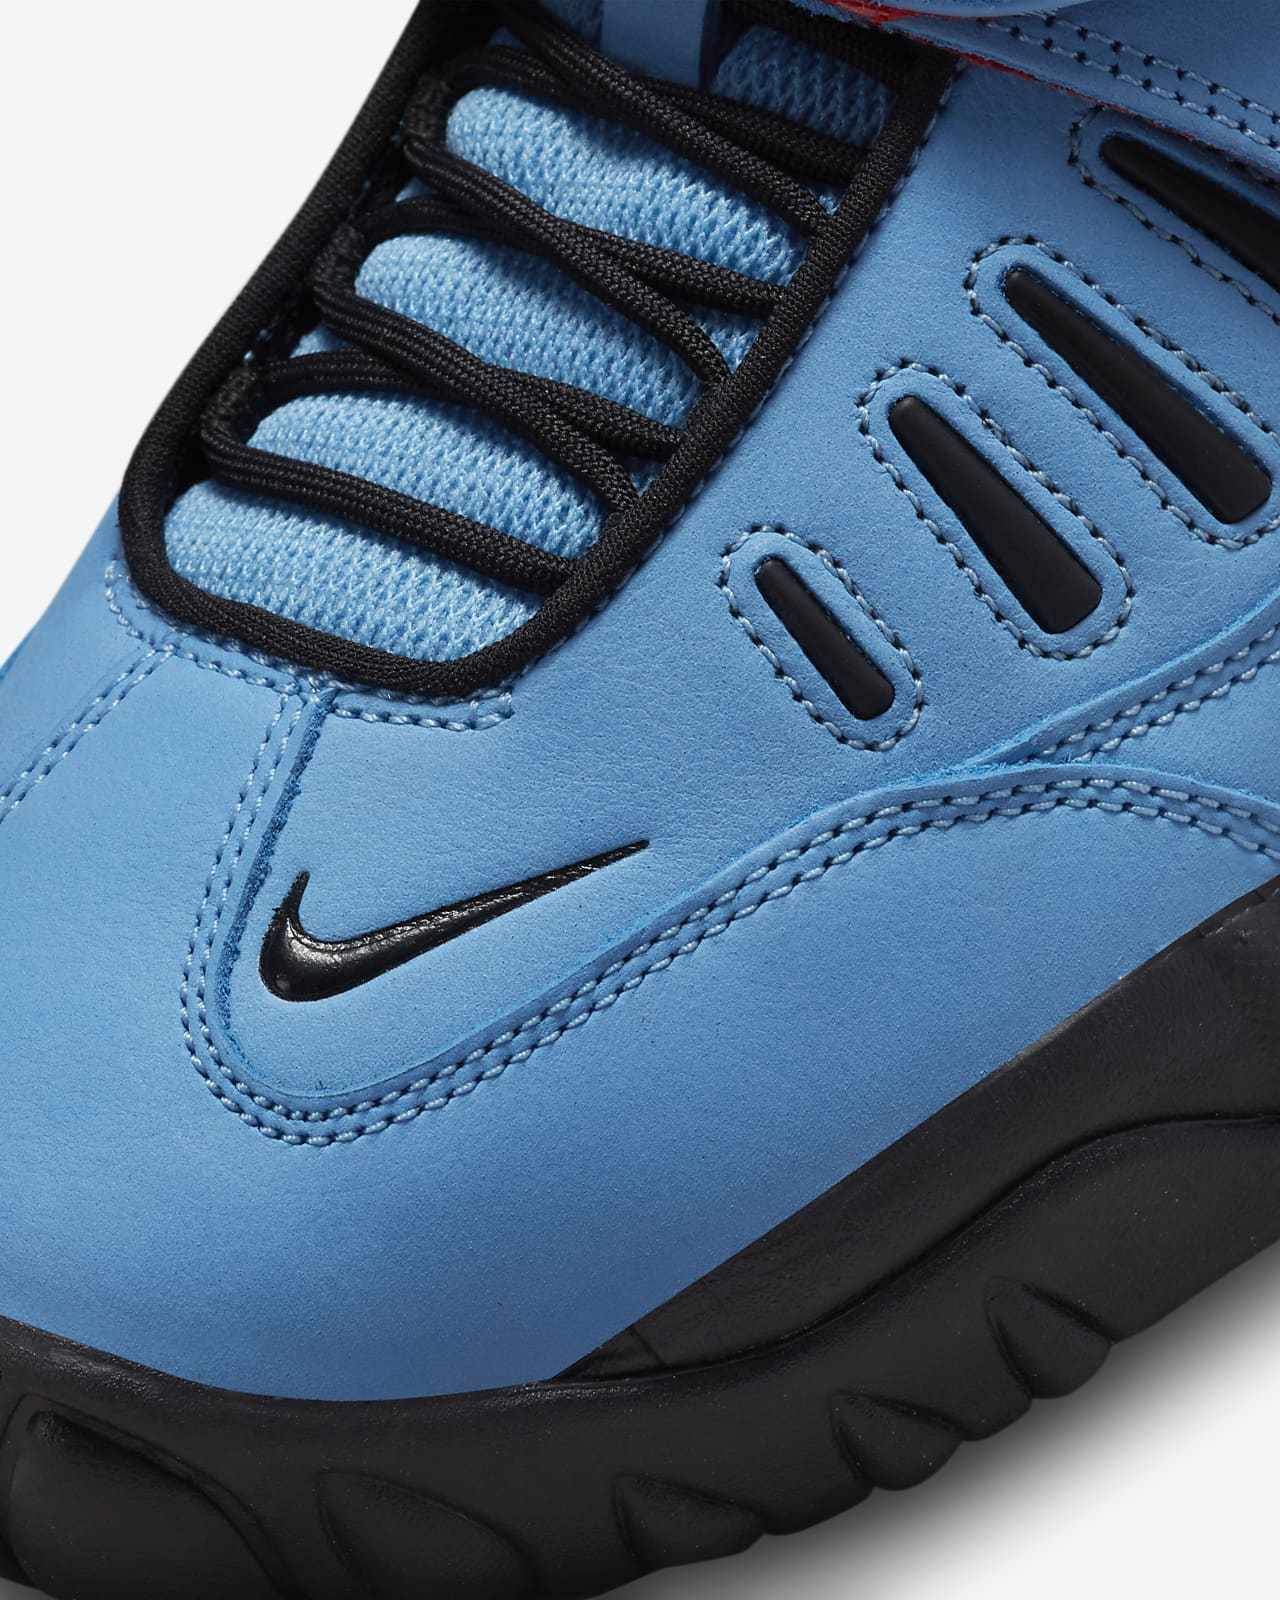 X Ambush Air Force 1 Sneakers in Blue - Nike